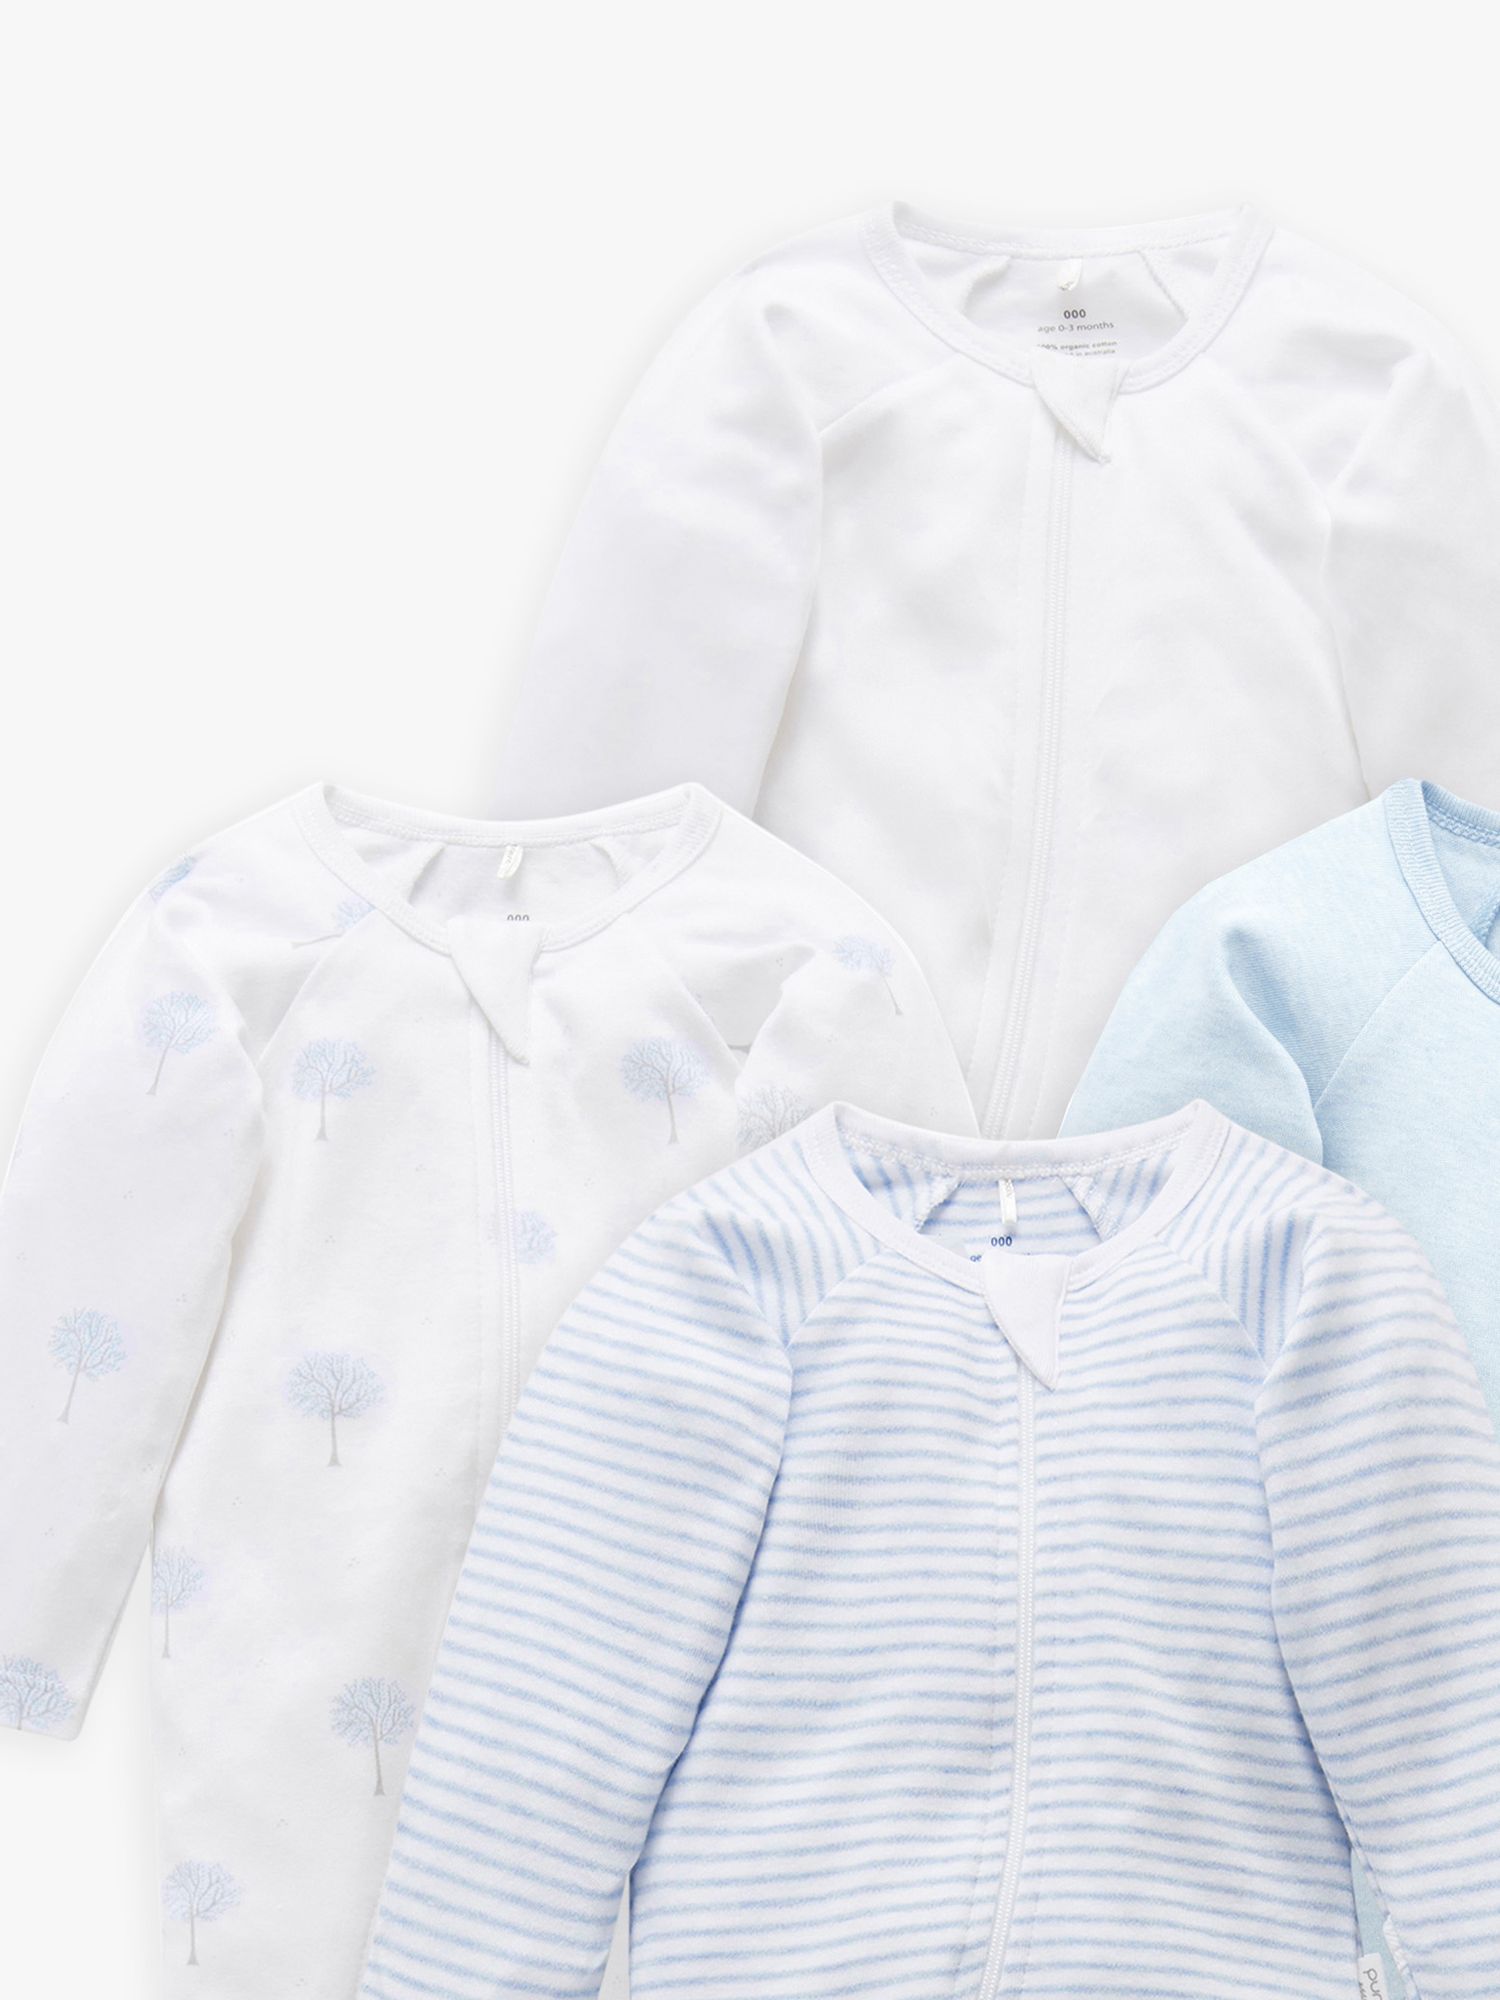 Purebaby Organic Cotton Essential Zip Front Growsuit, Pack of 4, Blue Melange, Newborn